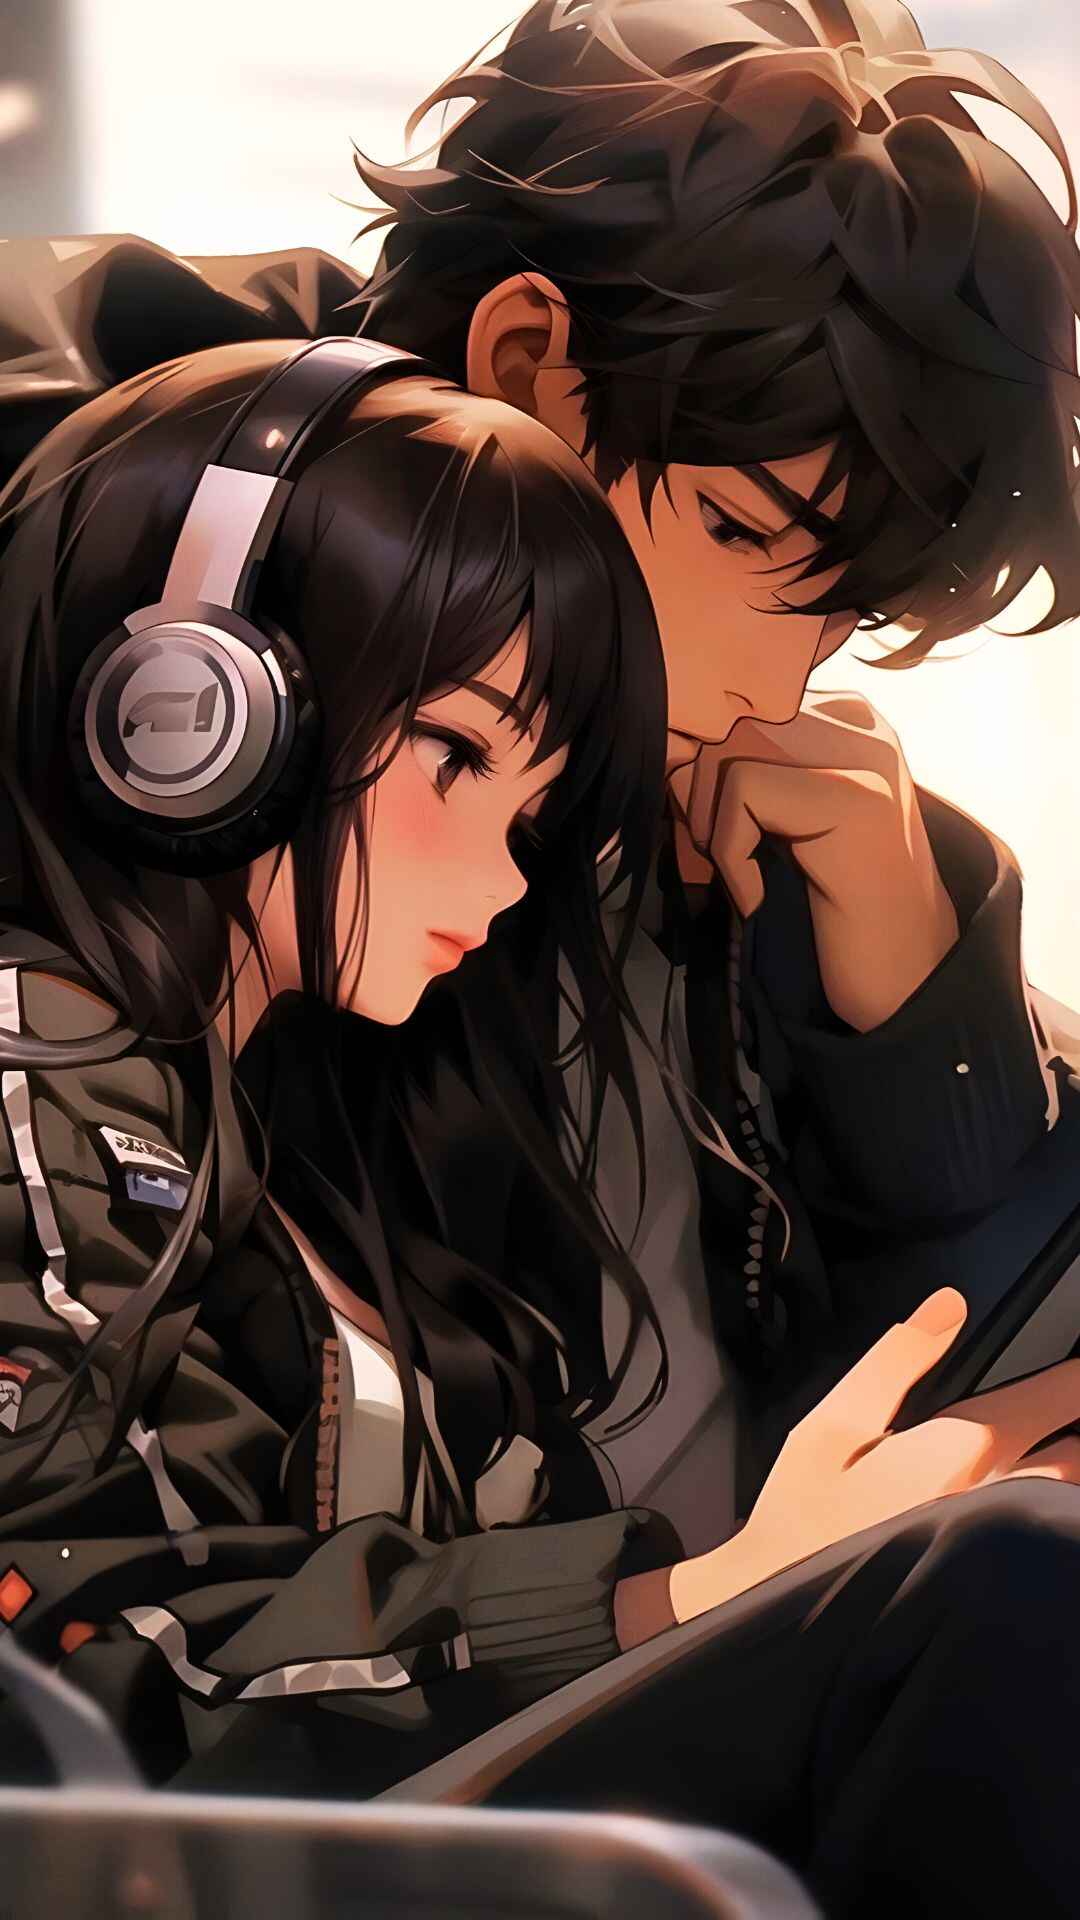 Anime Girl With Headphones iPhone Wallpaper